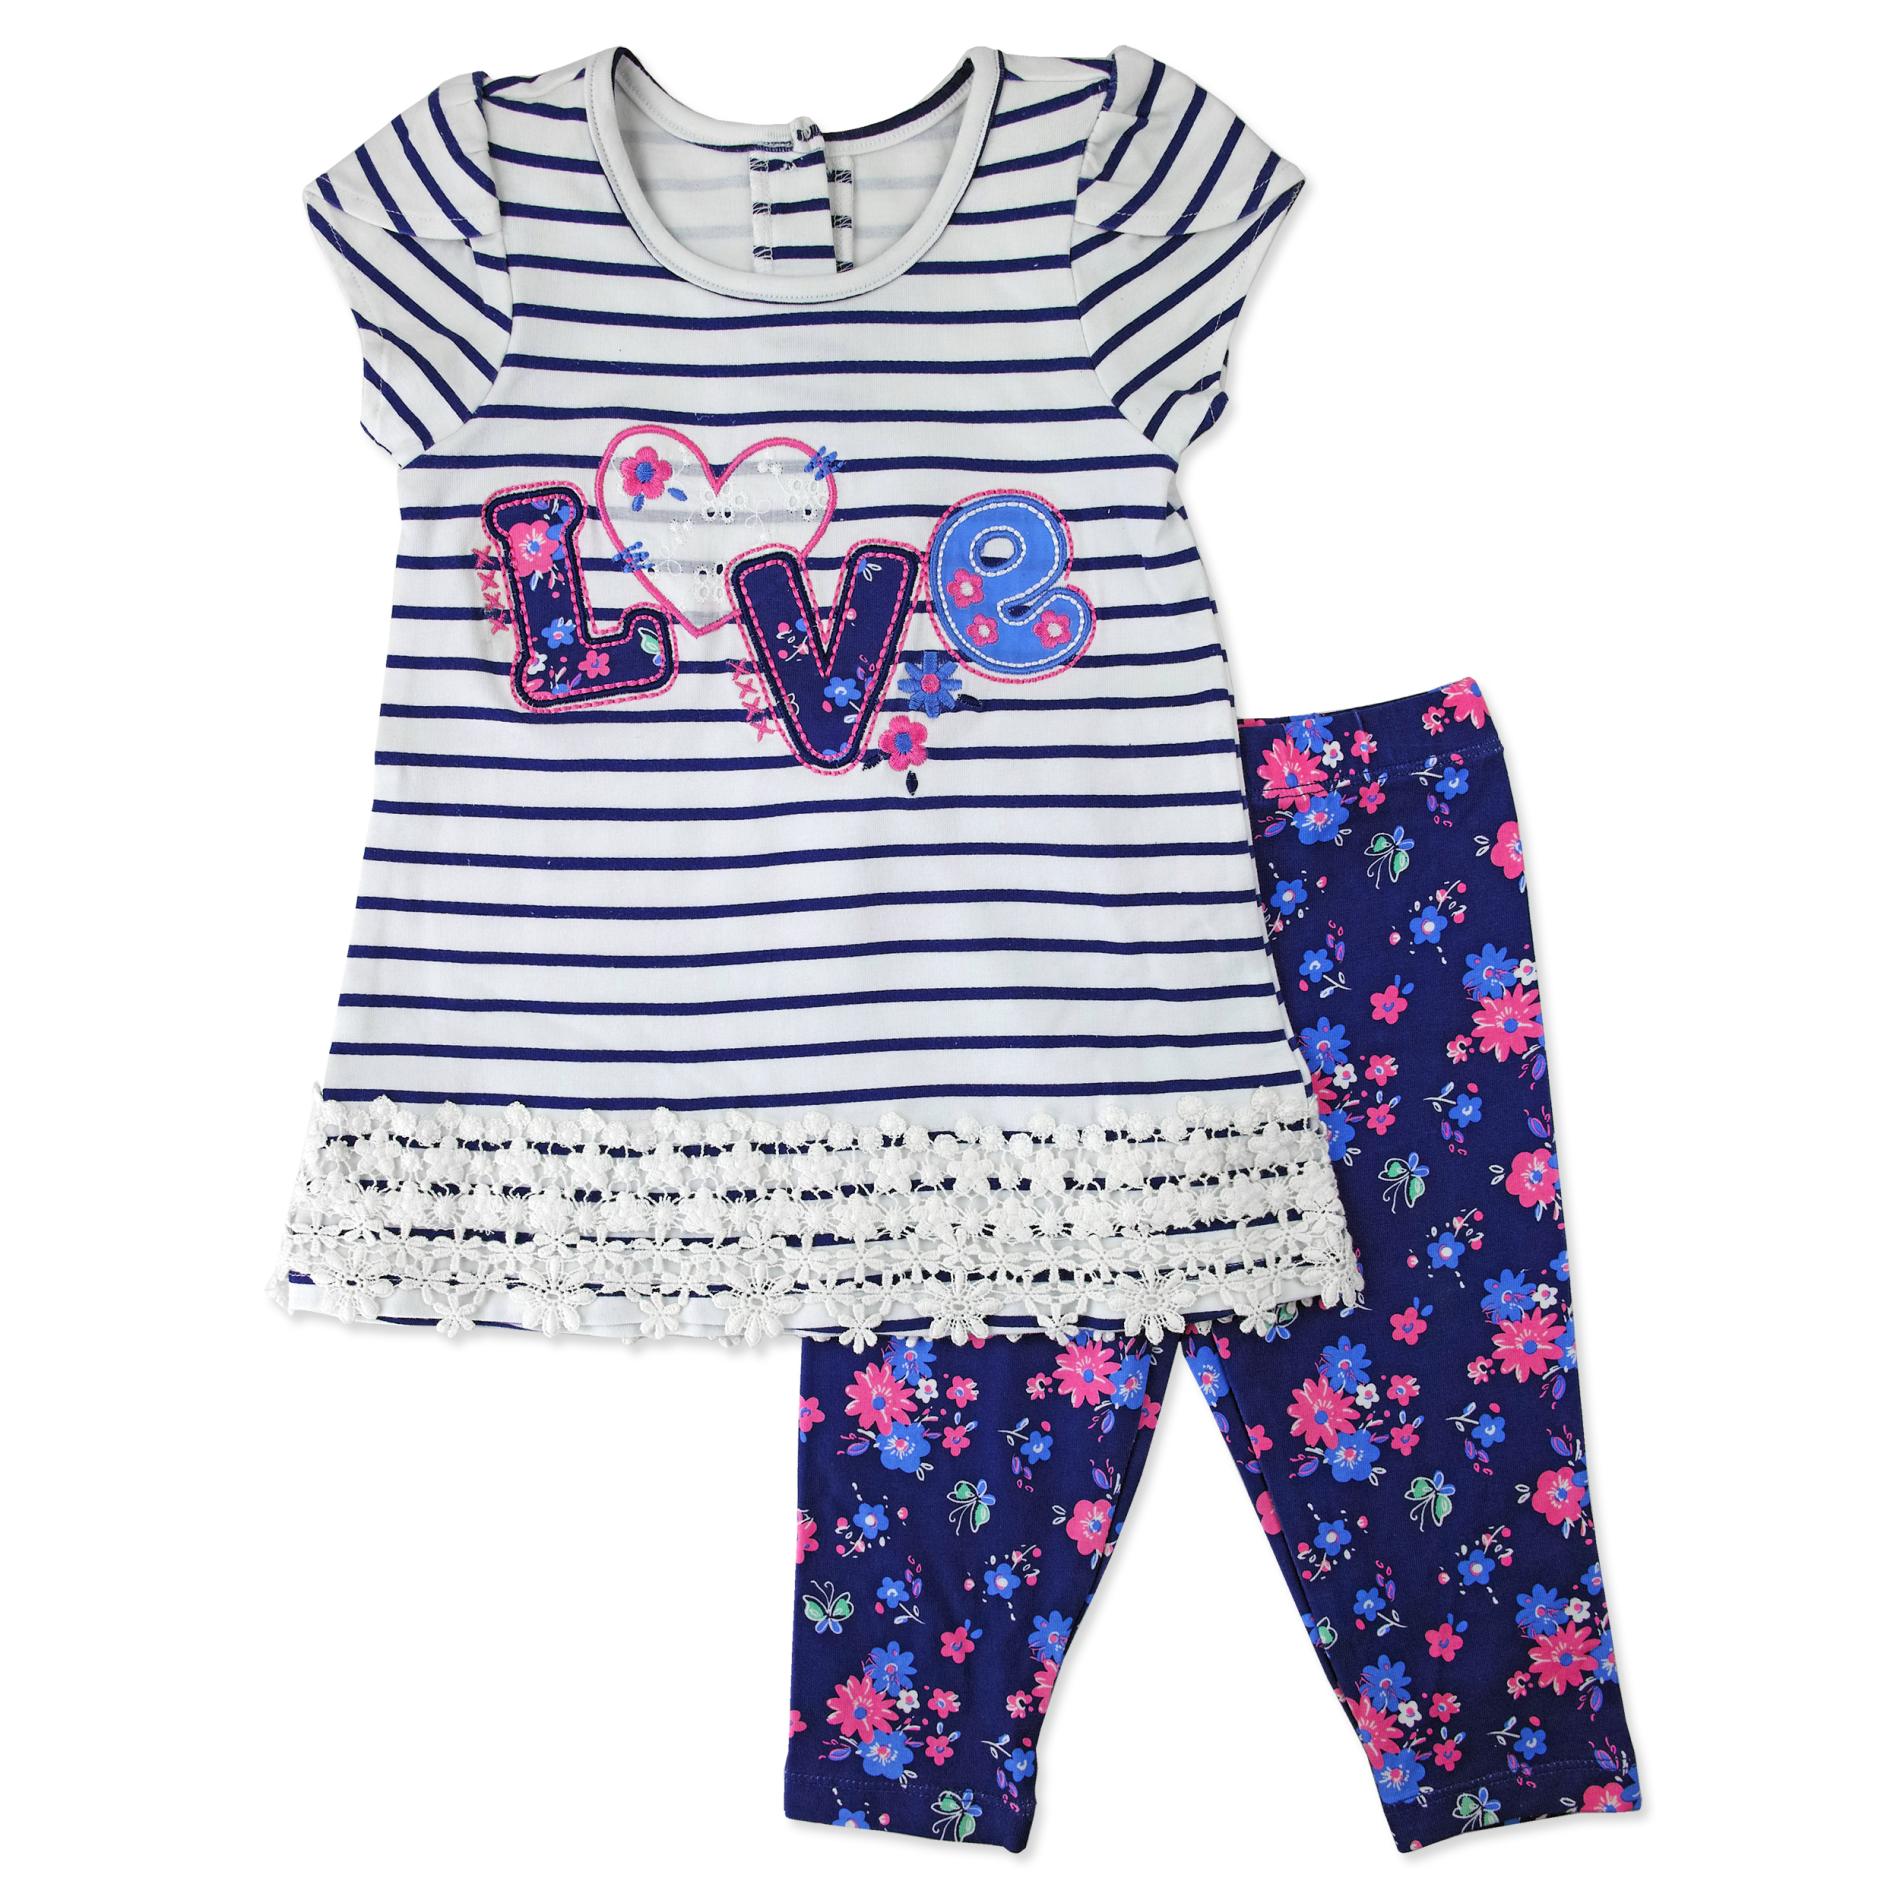 Nanette Infant & Toddler Girls' Short-Sleeve Top & Leggings - Striped & Floral